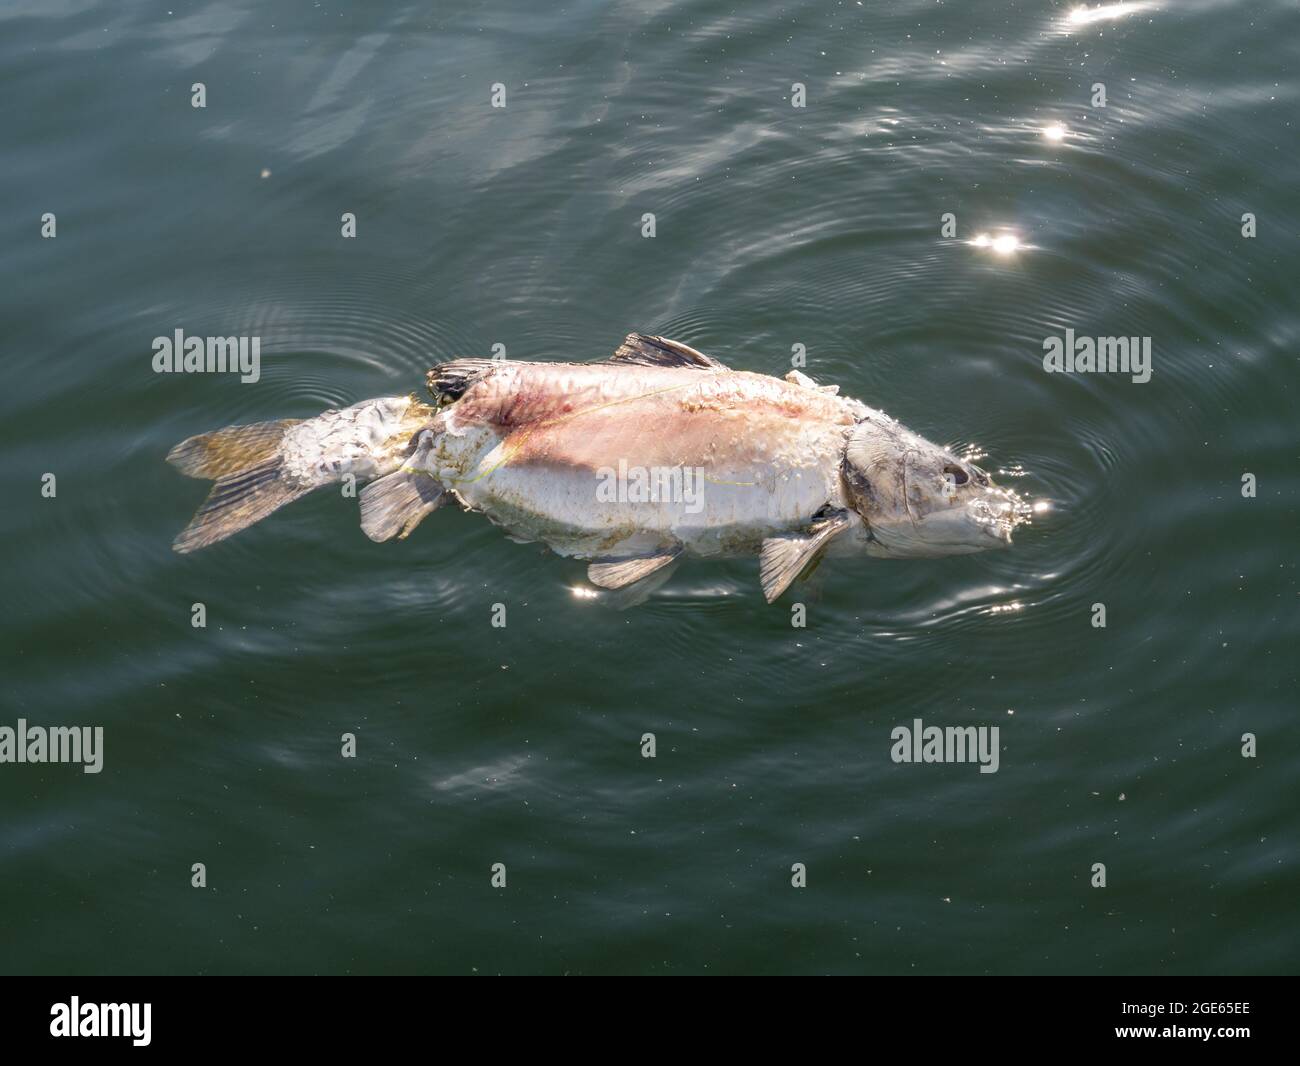 Common carp, Cyprinus carpio, dead fish floating in water, Haringvliet, Netherlands Stock Photo